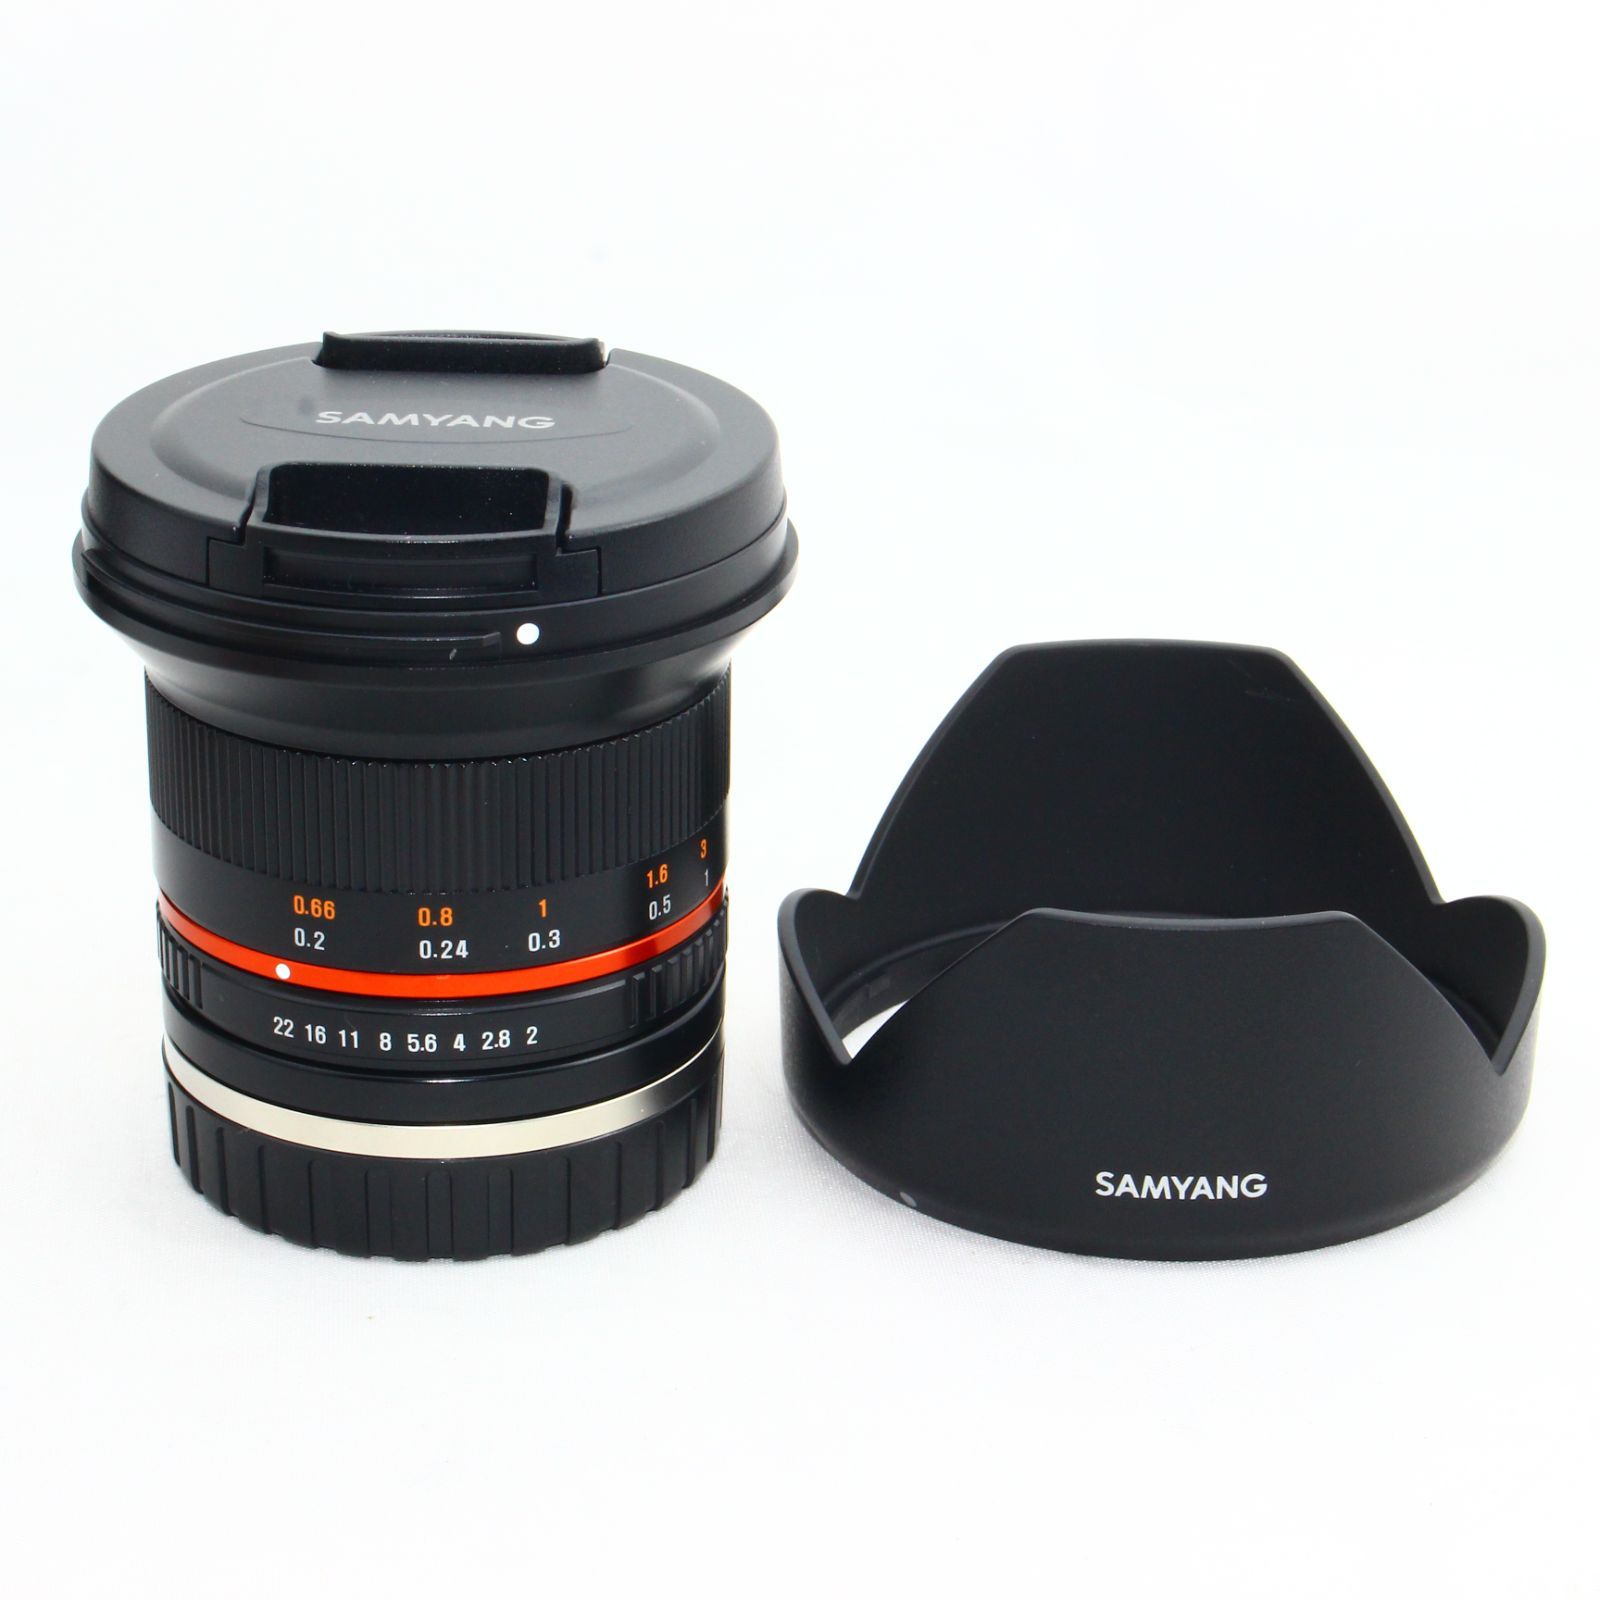 SAMYANG 単焦点広角レンズ 12mm F2.0 ブラック キヤノン EOS M用 APS-C